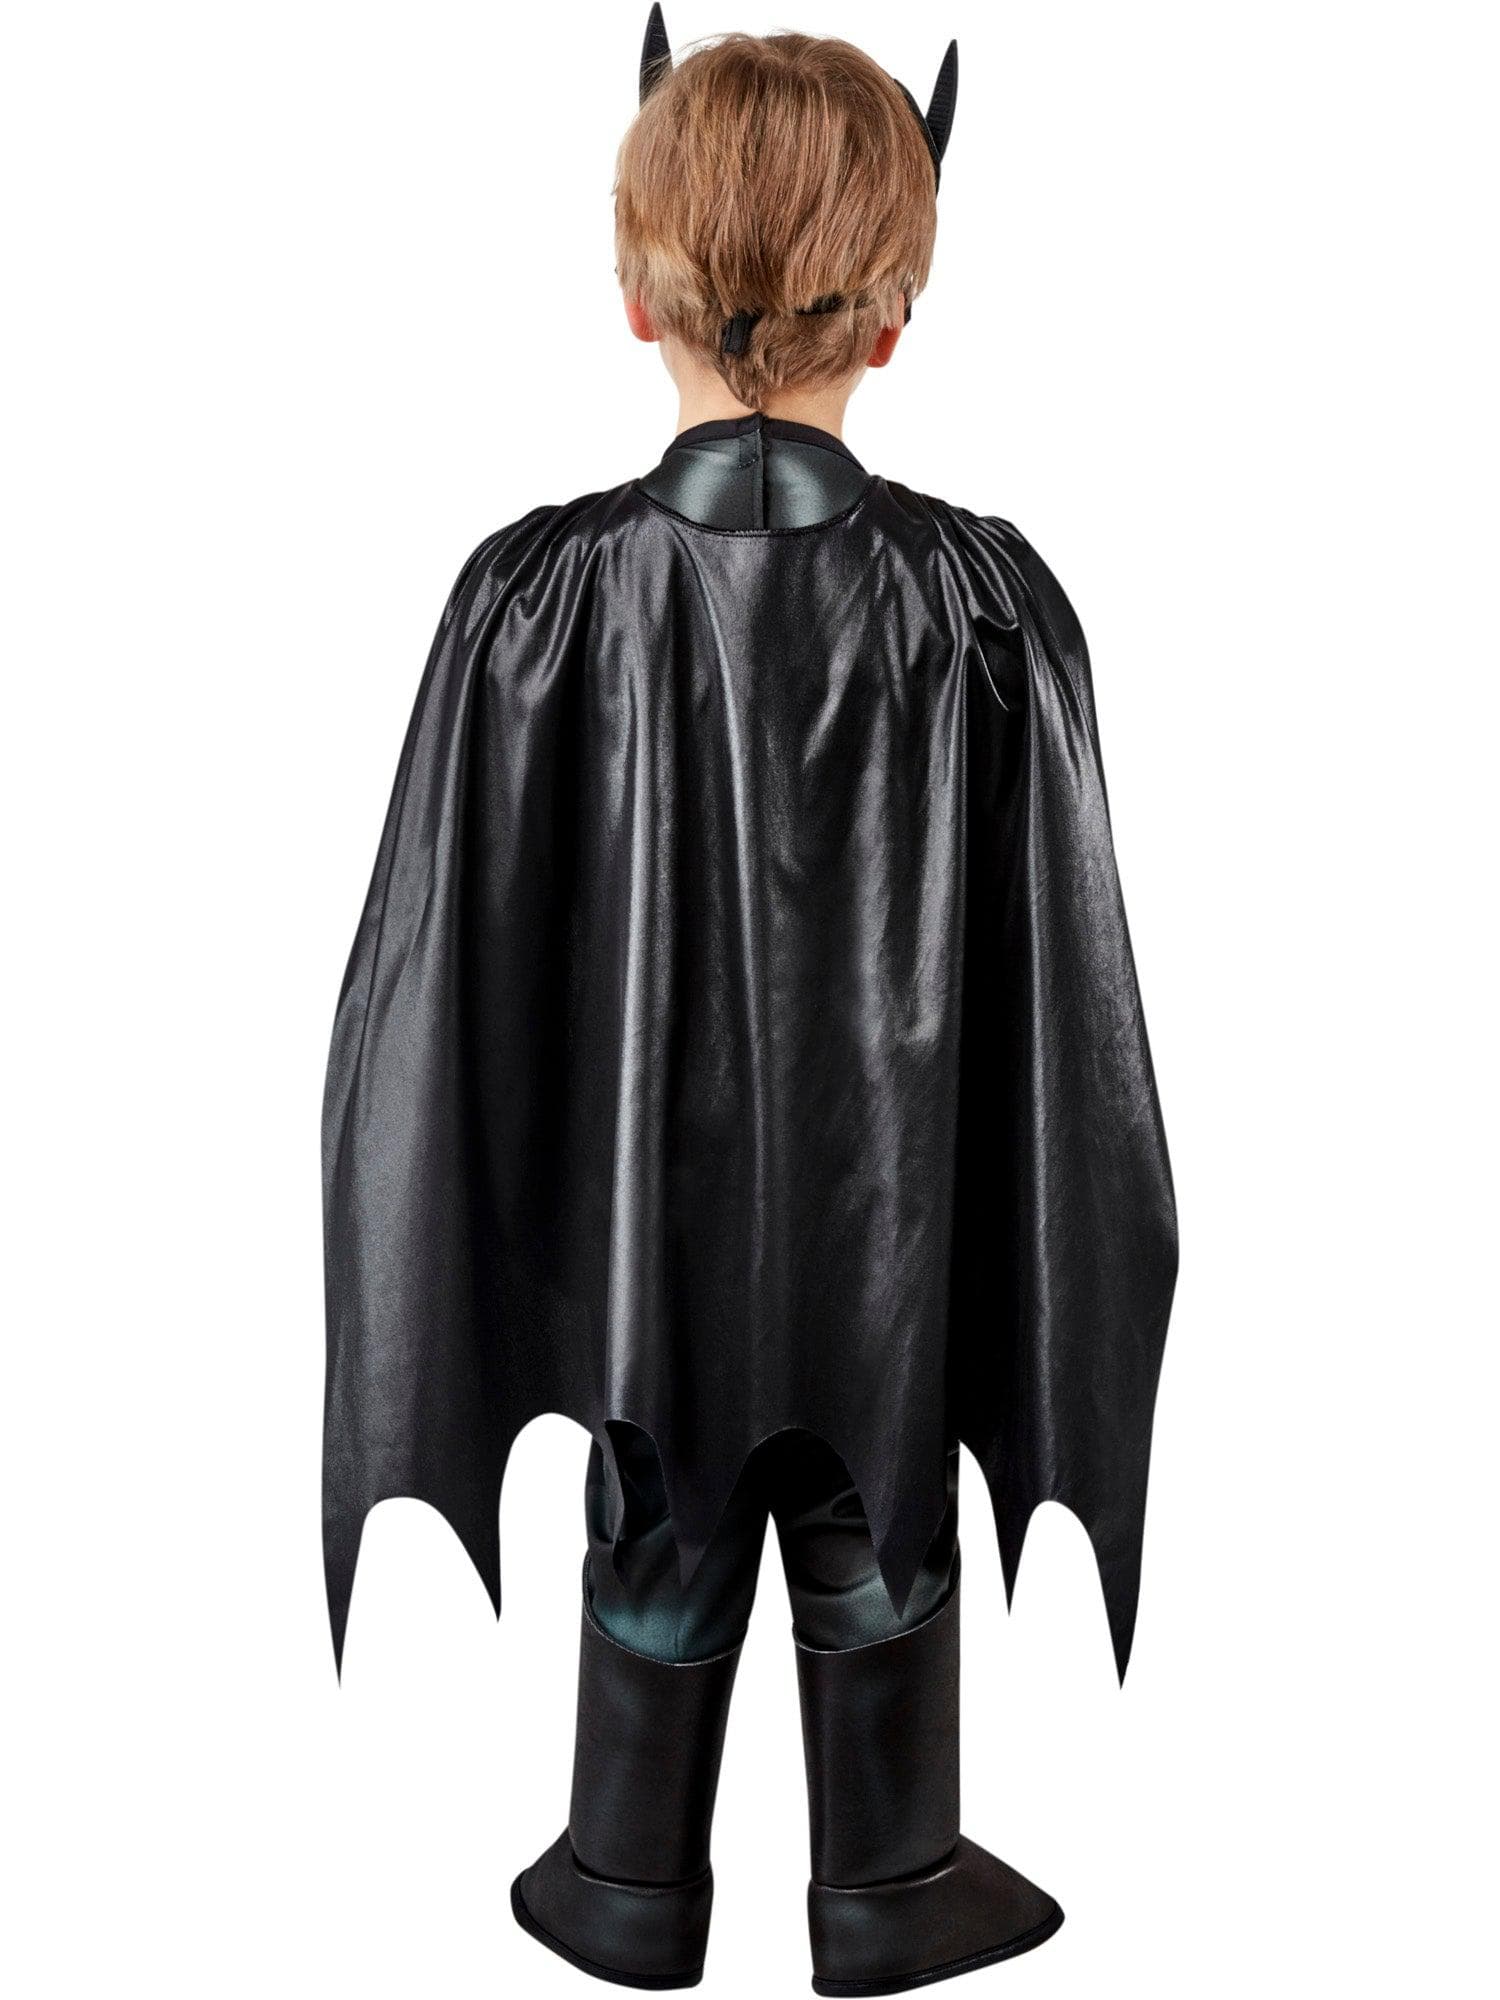 Batman Toddler Costume - costumes.com